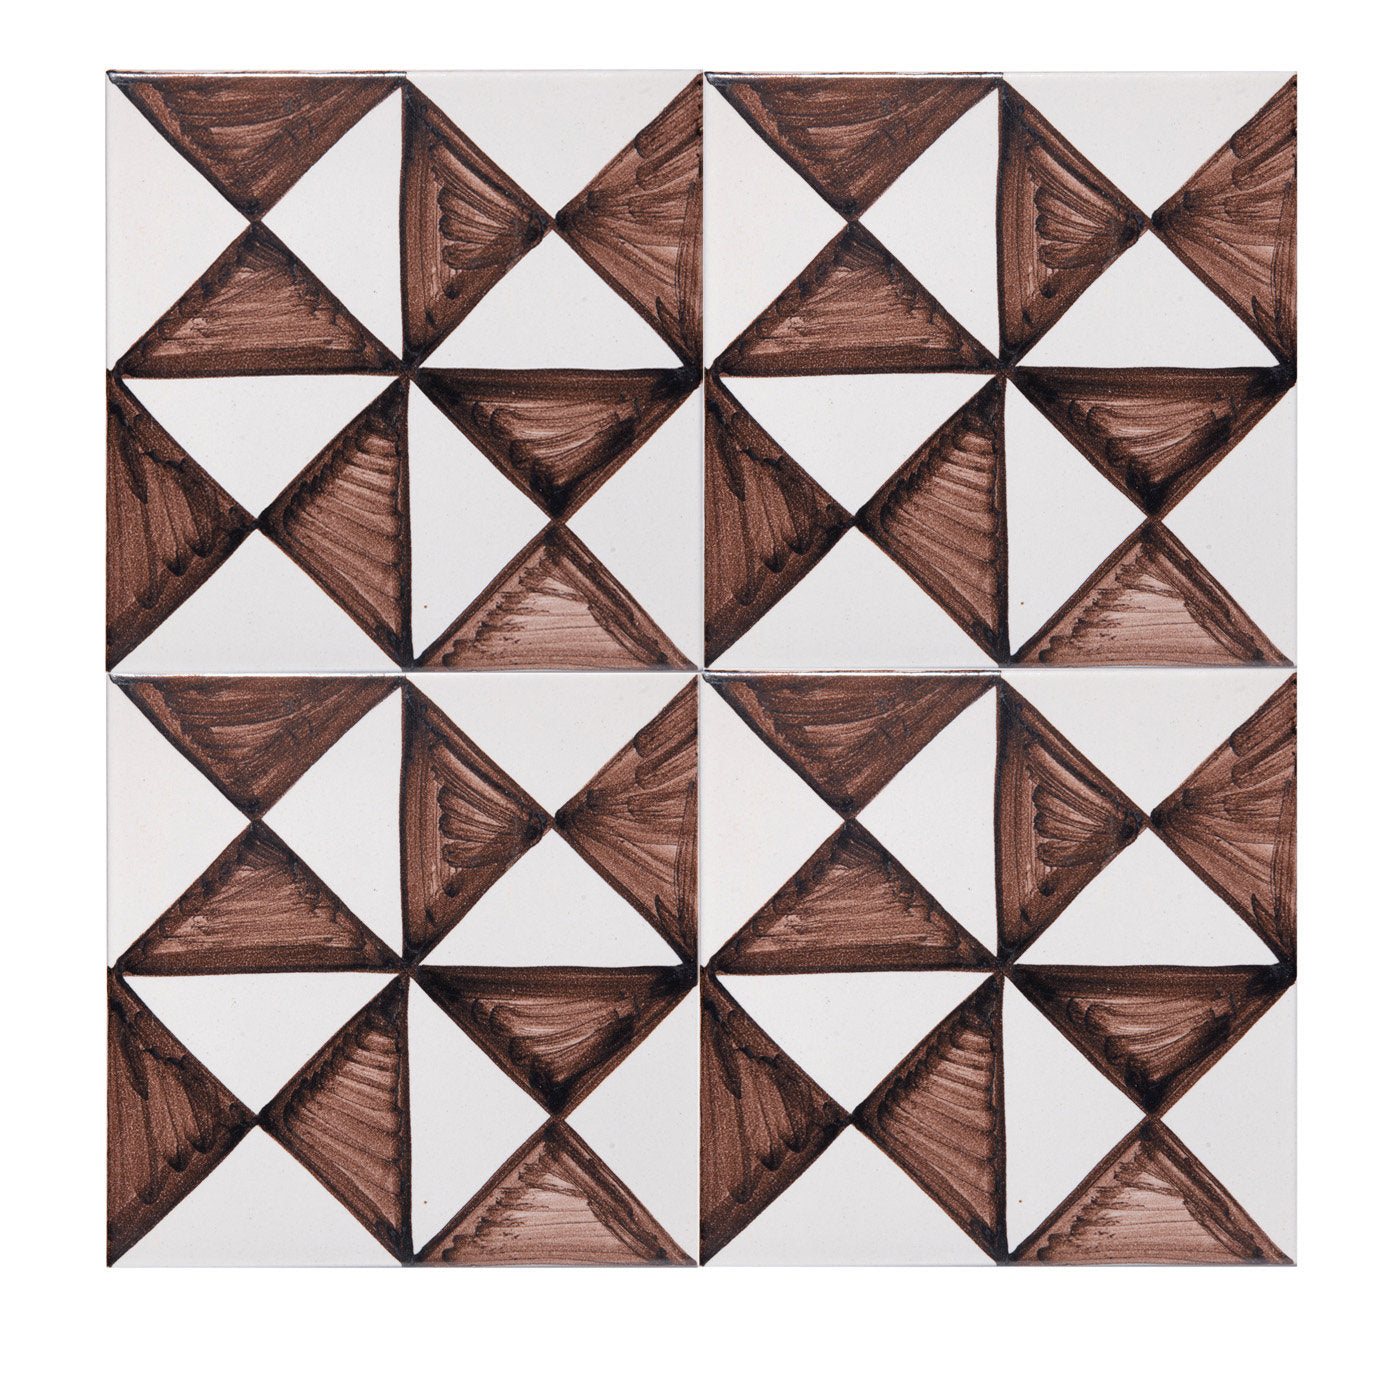 Set of 4 Riggiola Brown Tiles - Main view